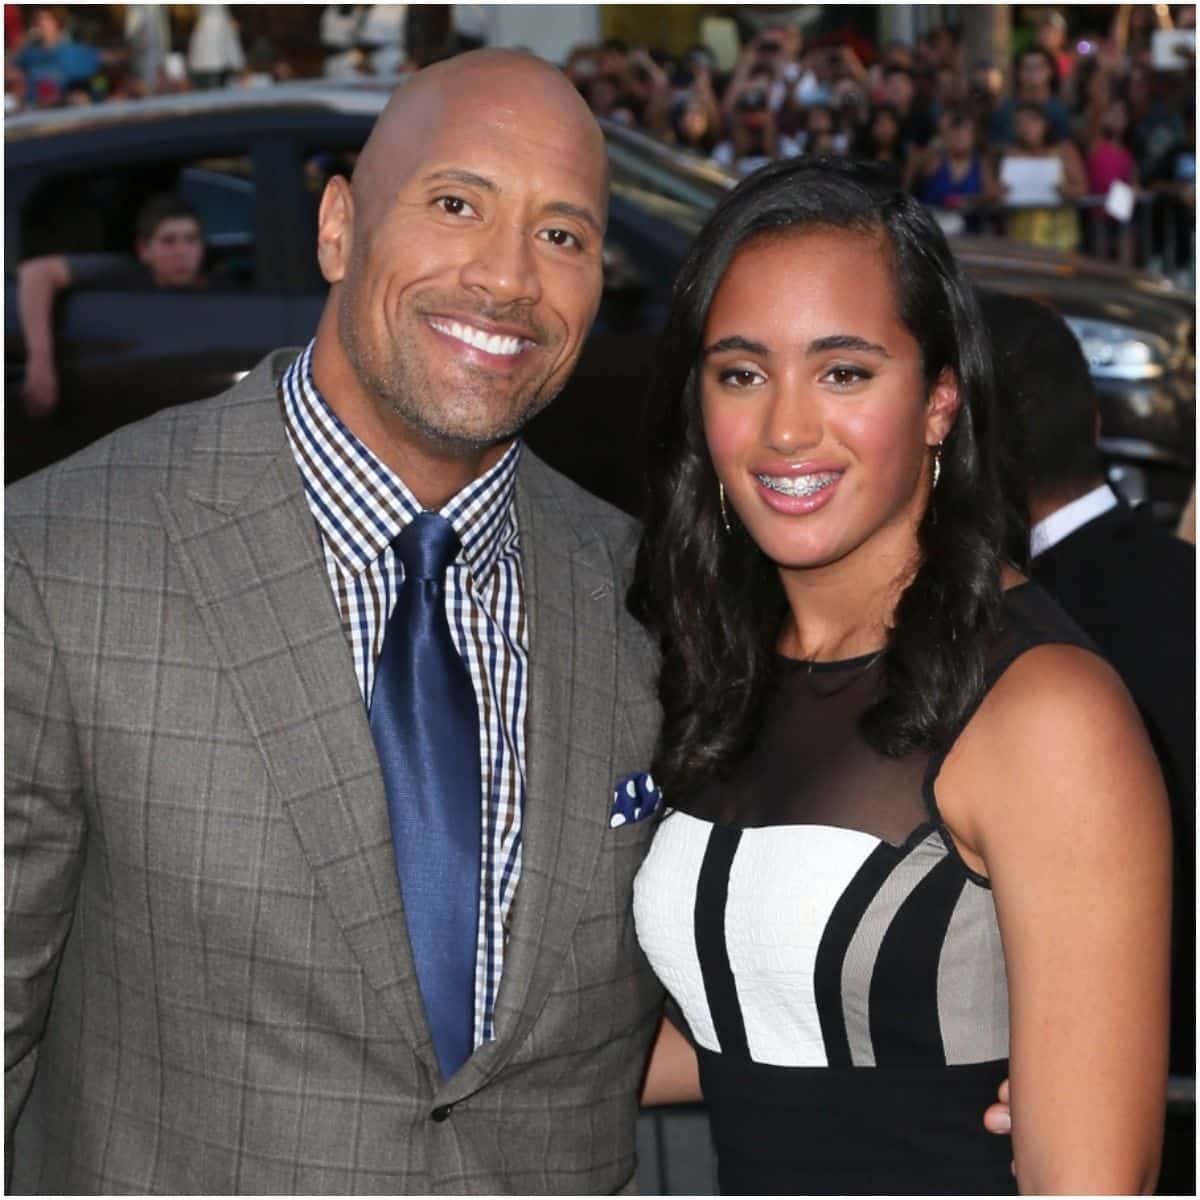 Dwayne Johnson and his daughter Simone